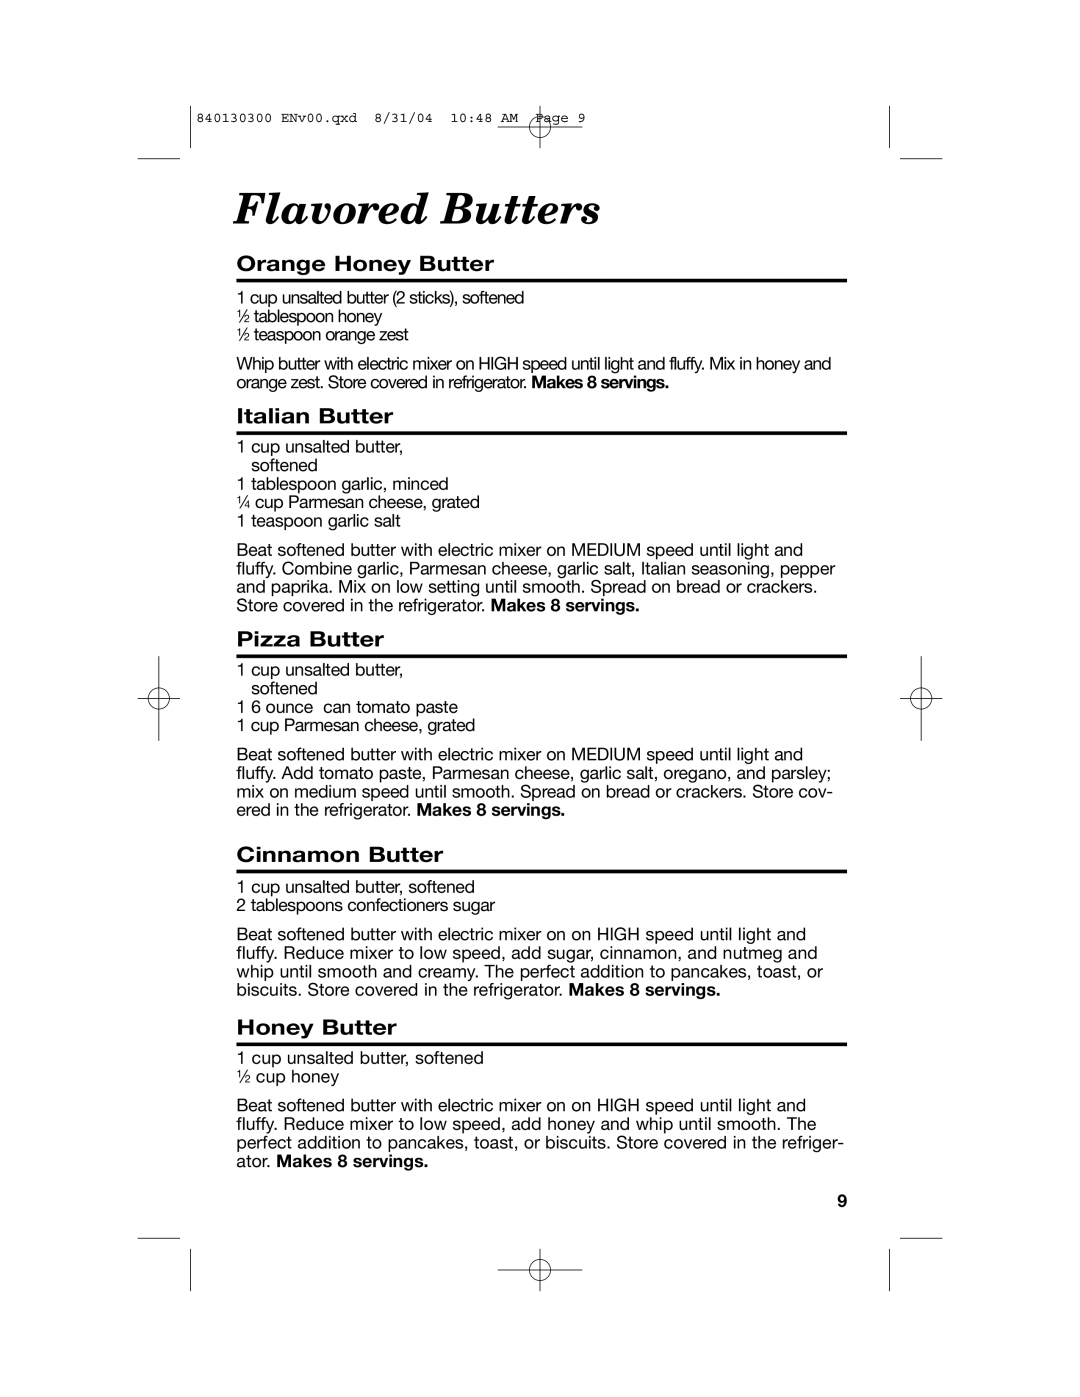 Hamilton Beach All-Metal Toasters Flavored Butters, Orange Honey Butter, Italian Butter, Pizza Butter, Cinnamon Butter 